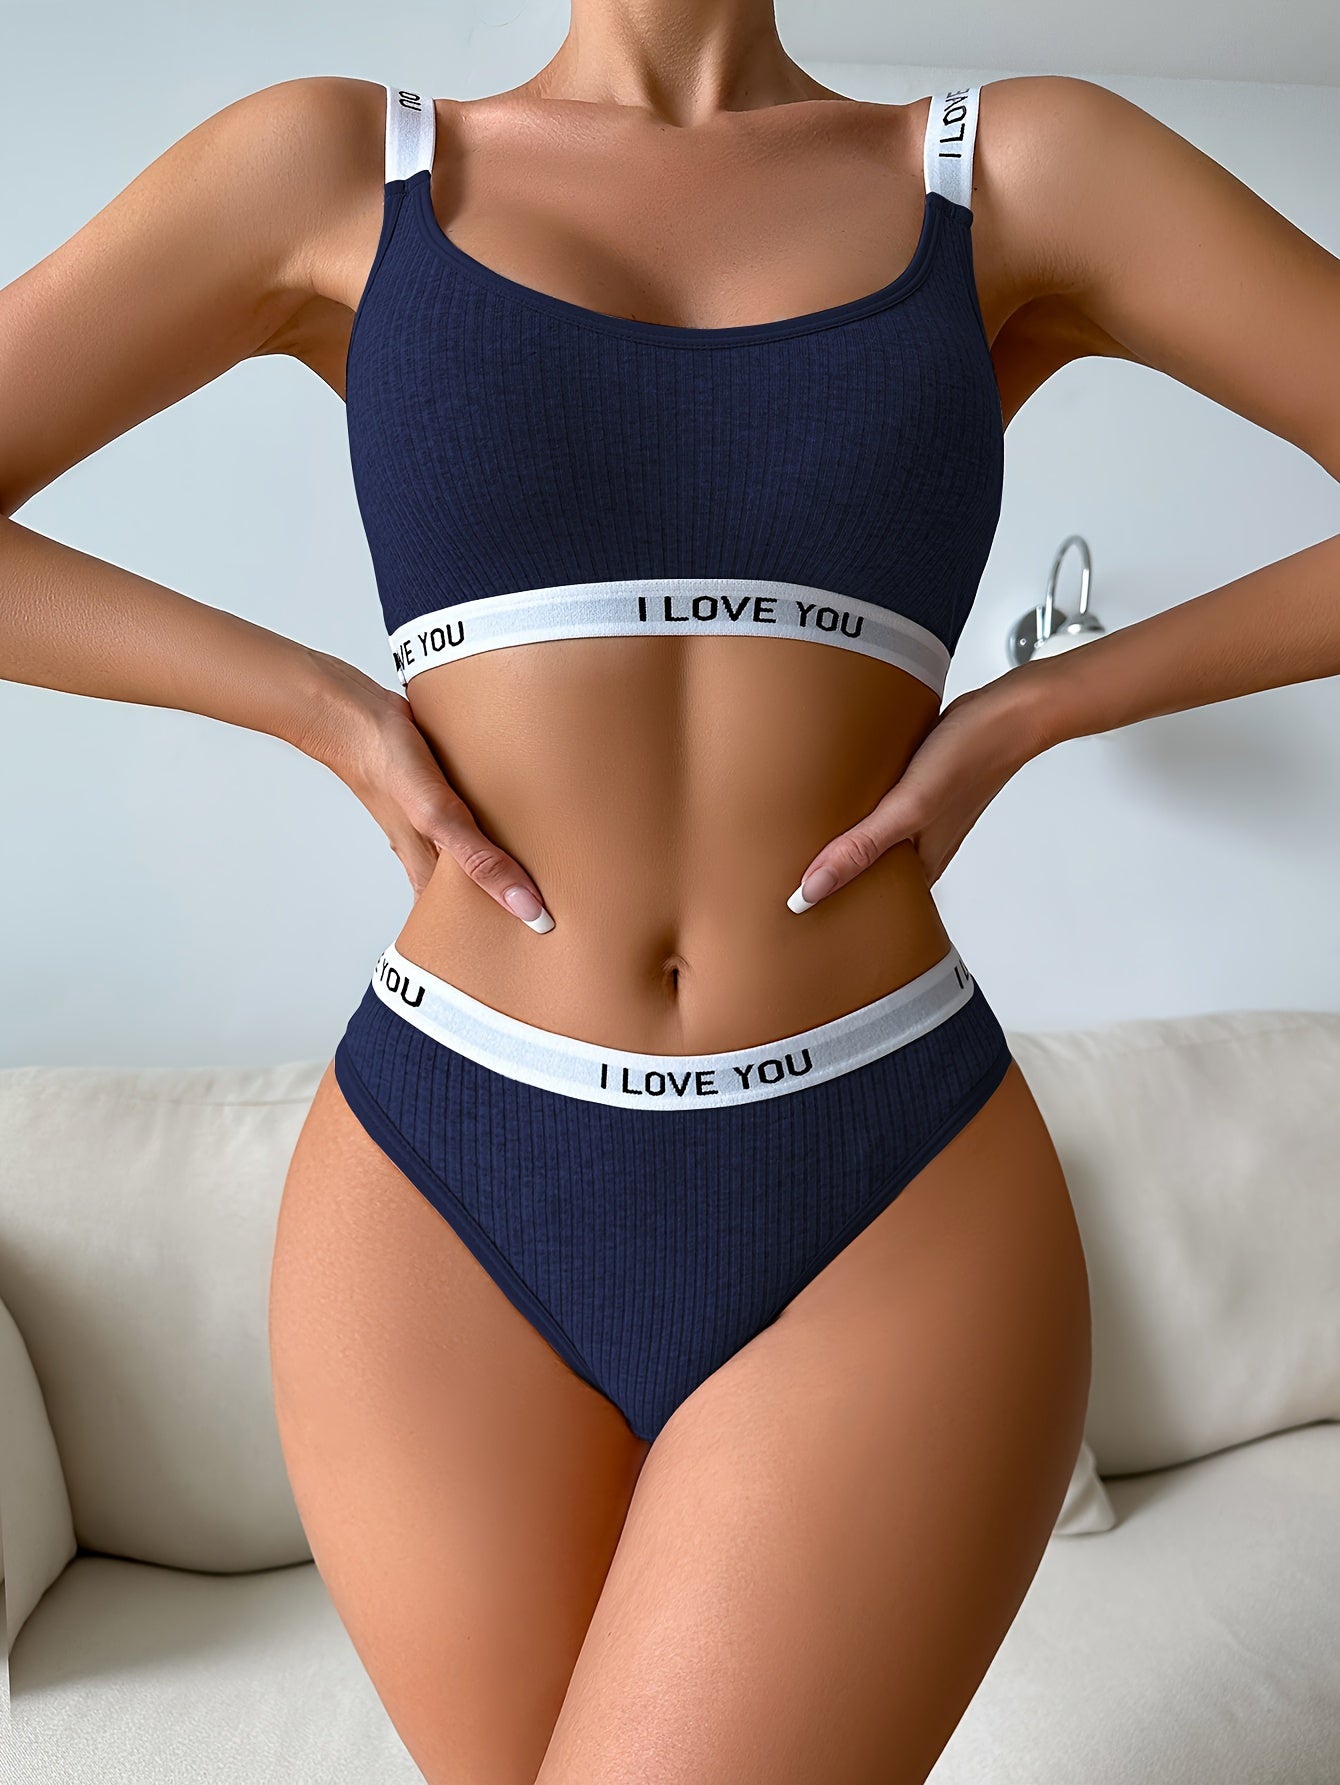 Antmvs Letter Print Bra & Panties, Ribbed Wireless Bra & Elastic Thong Lingerie Set, Women's Lingerie & Underwear